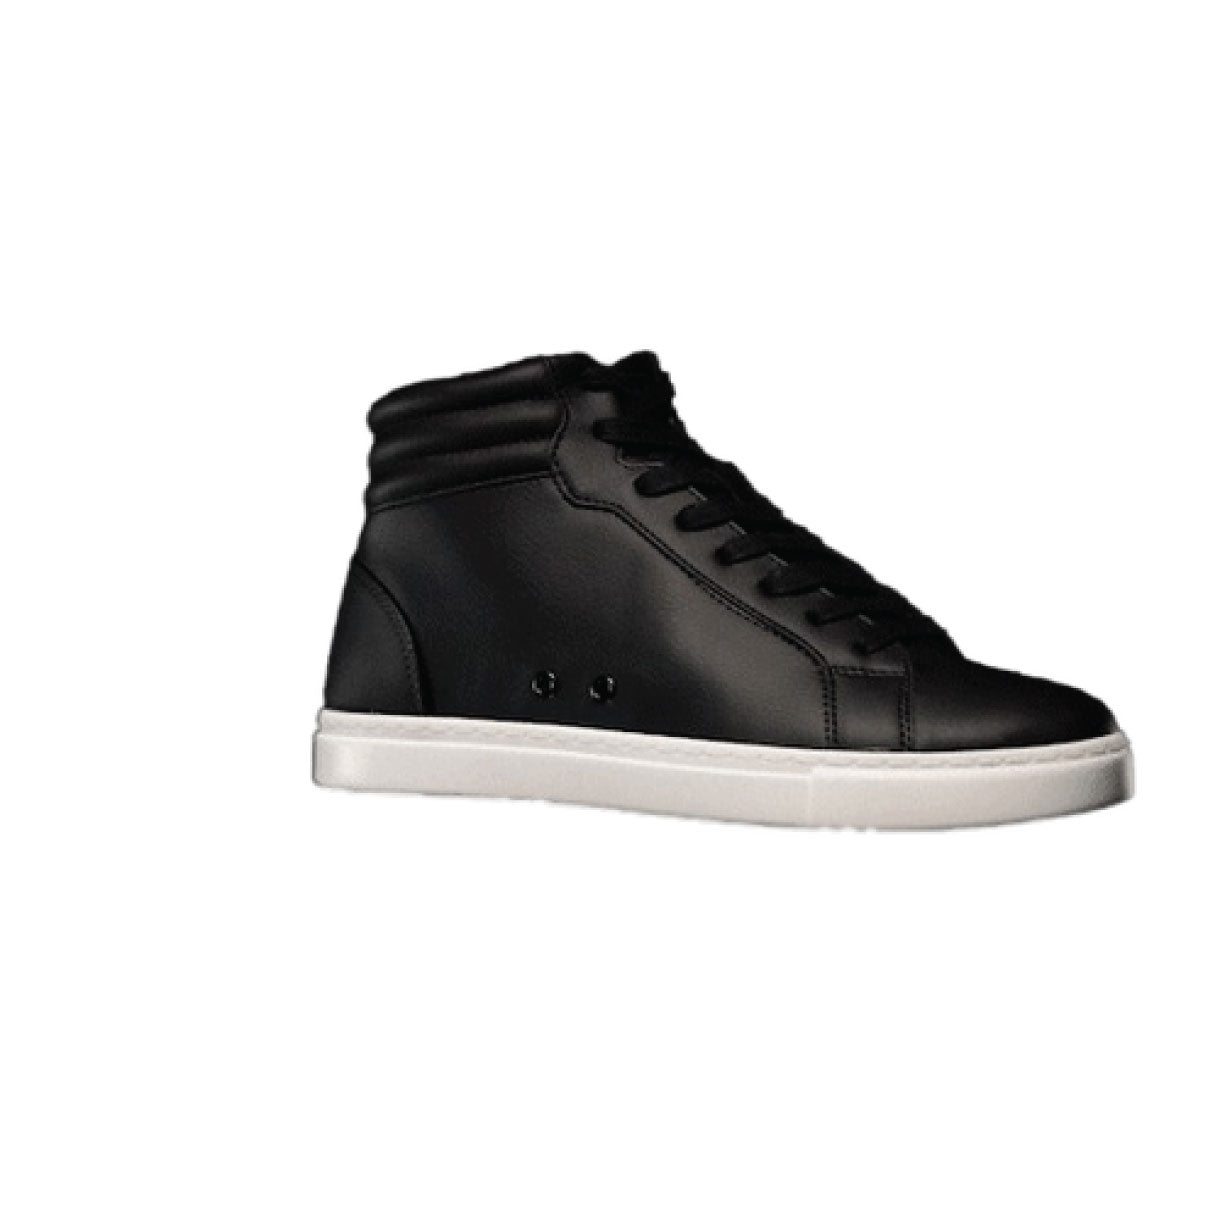 Fugo High Top Dance Sneakers en blanco y negro